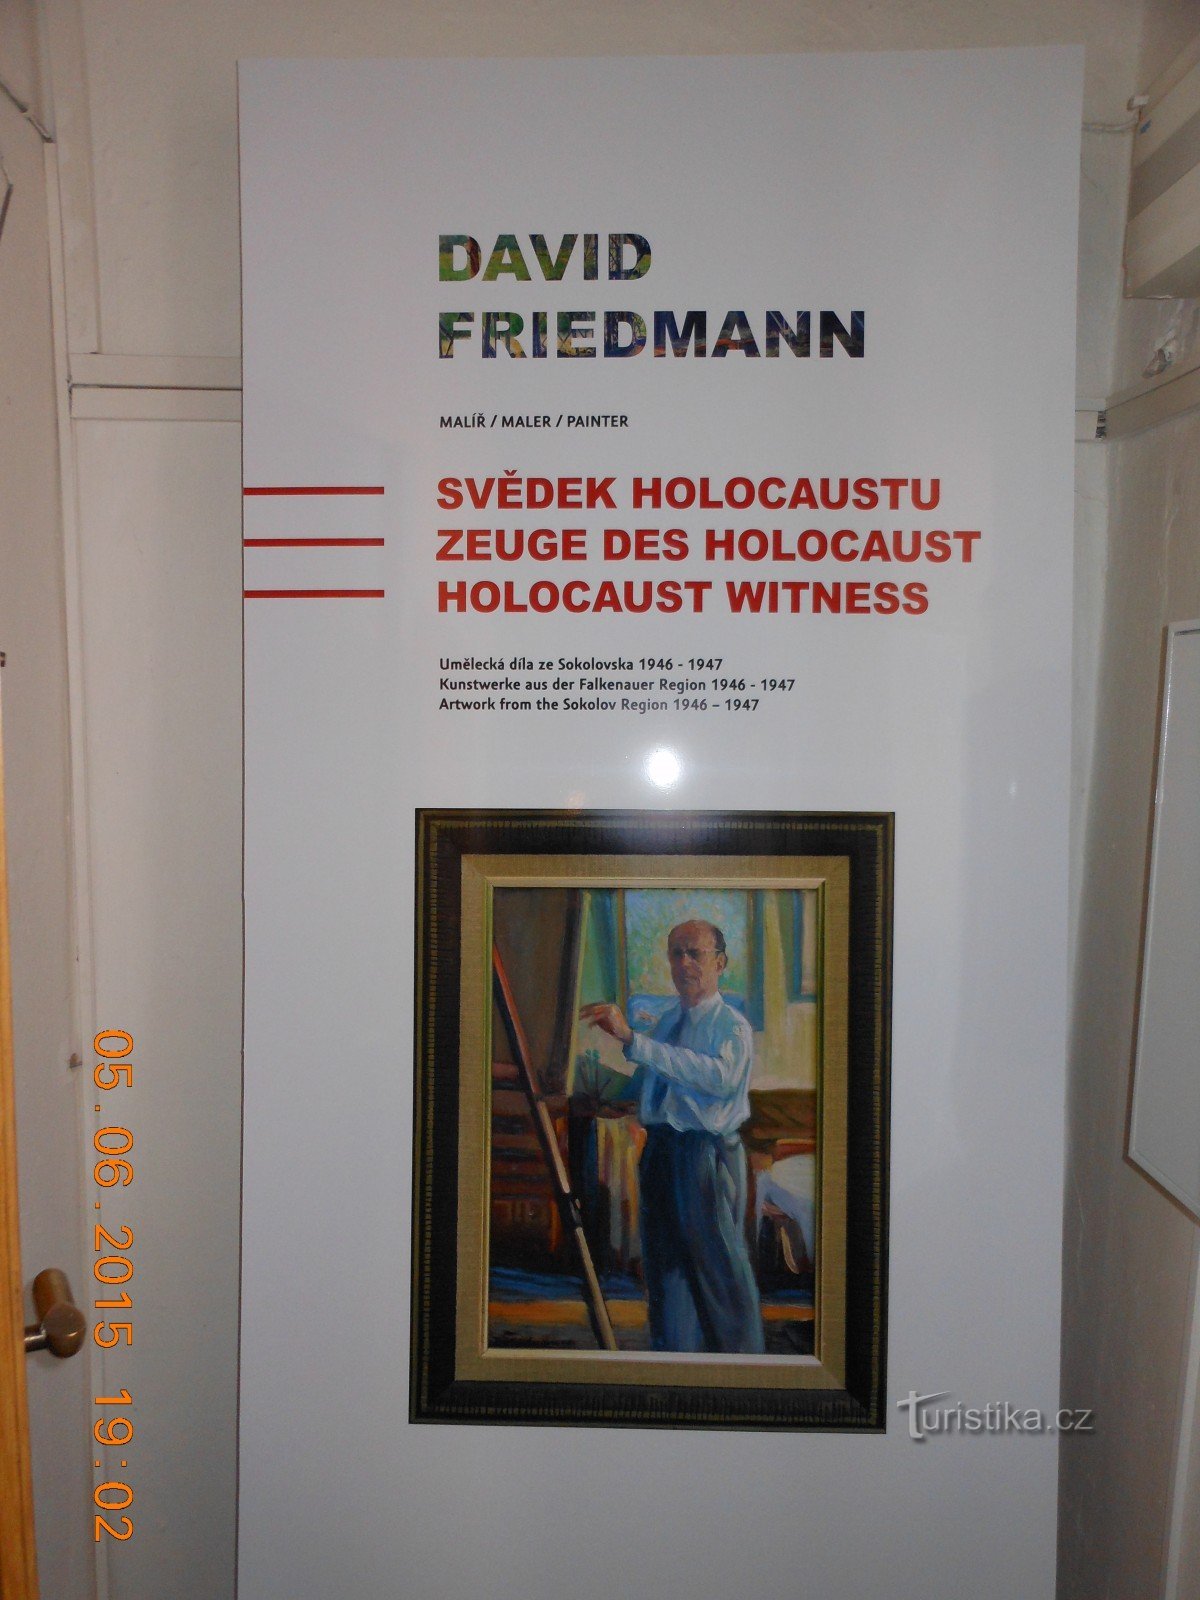 Utställning DAVID FRIEDMANN - Sokolovmuseet